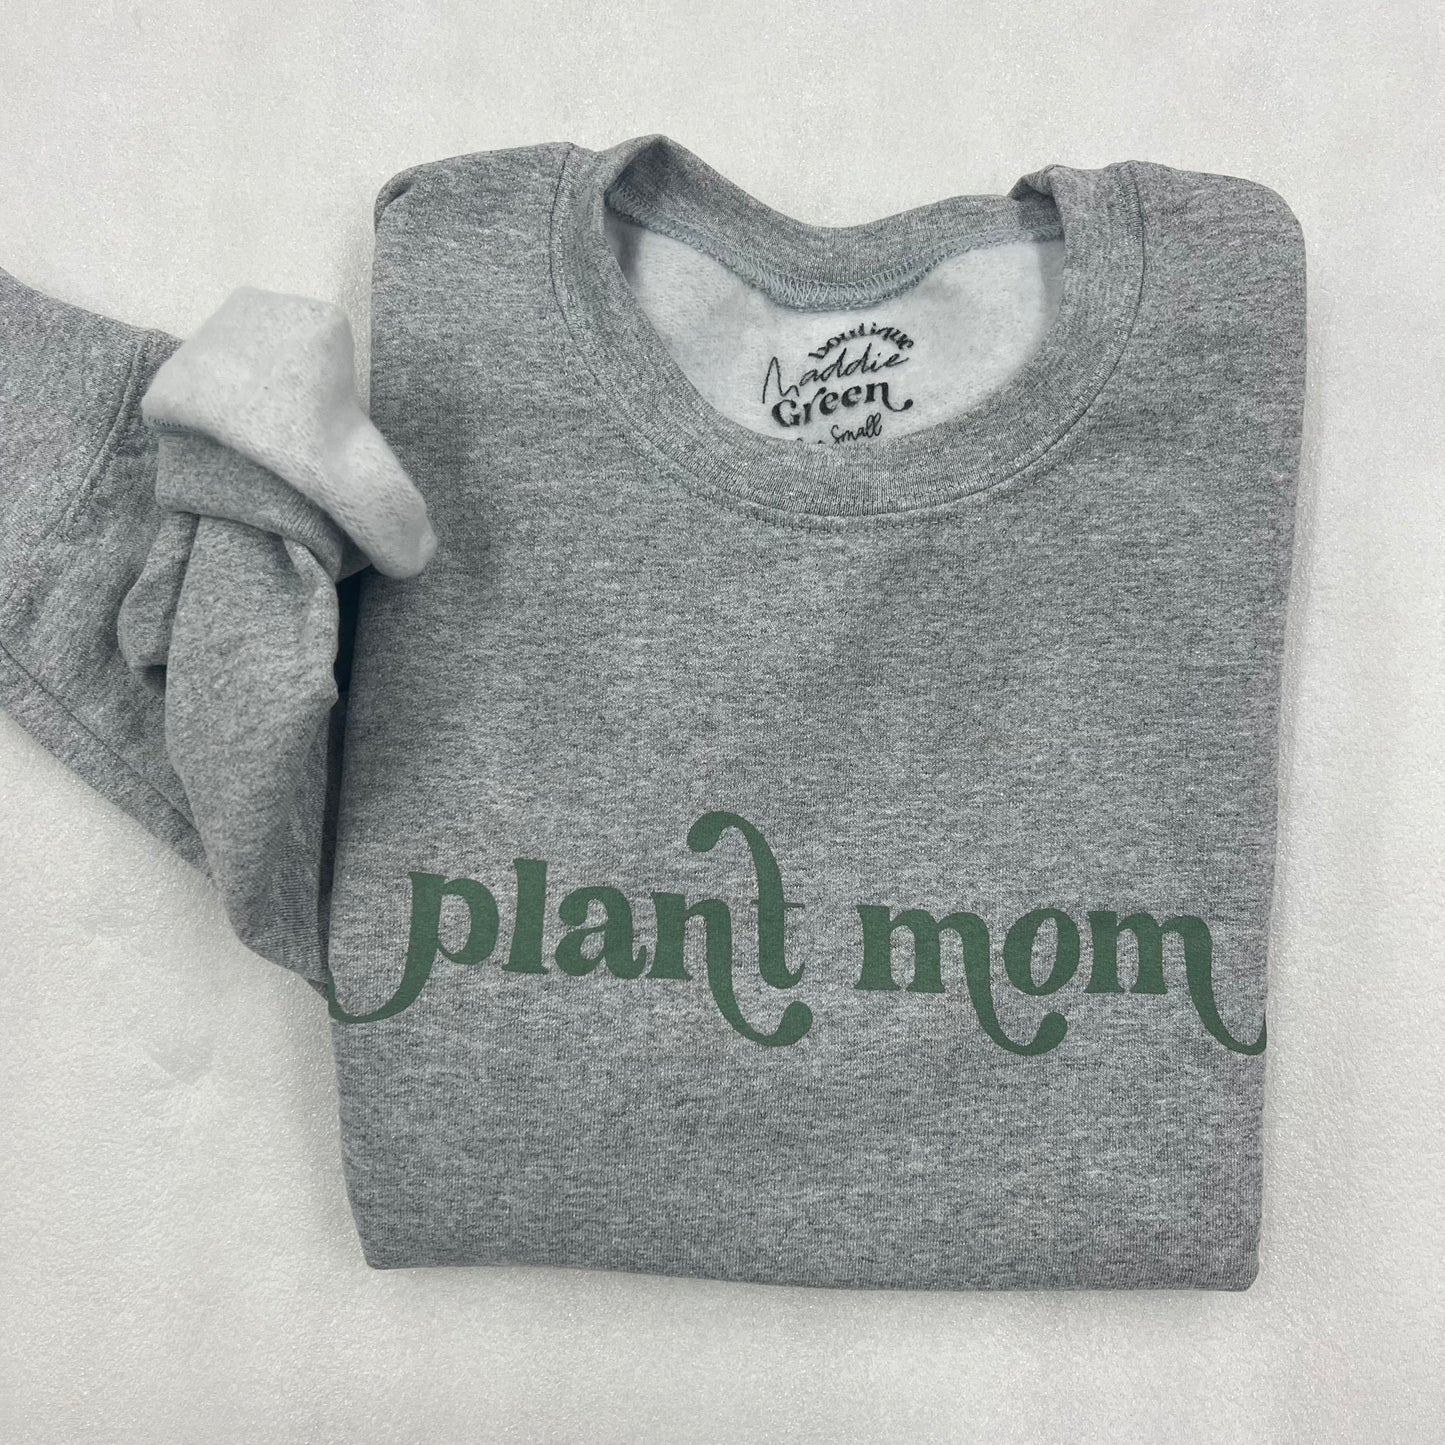 Plant Mom Grey Crewneck Sweatshirt